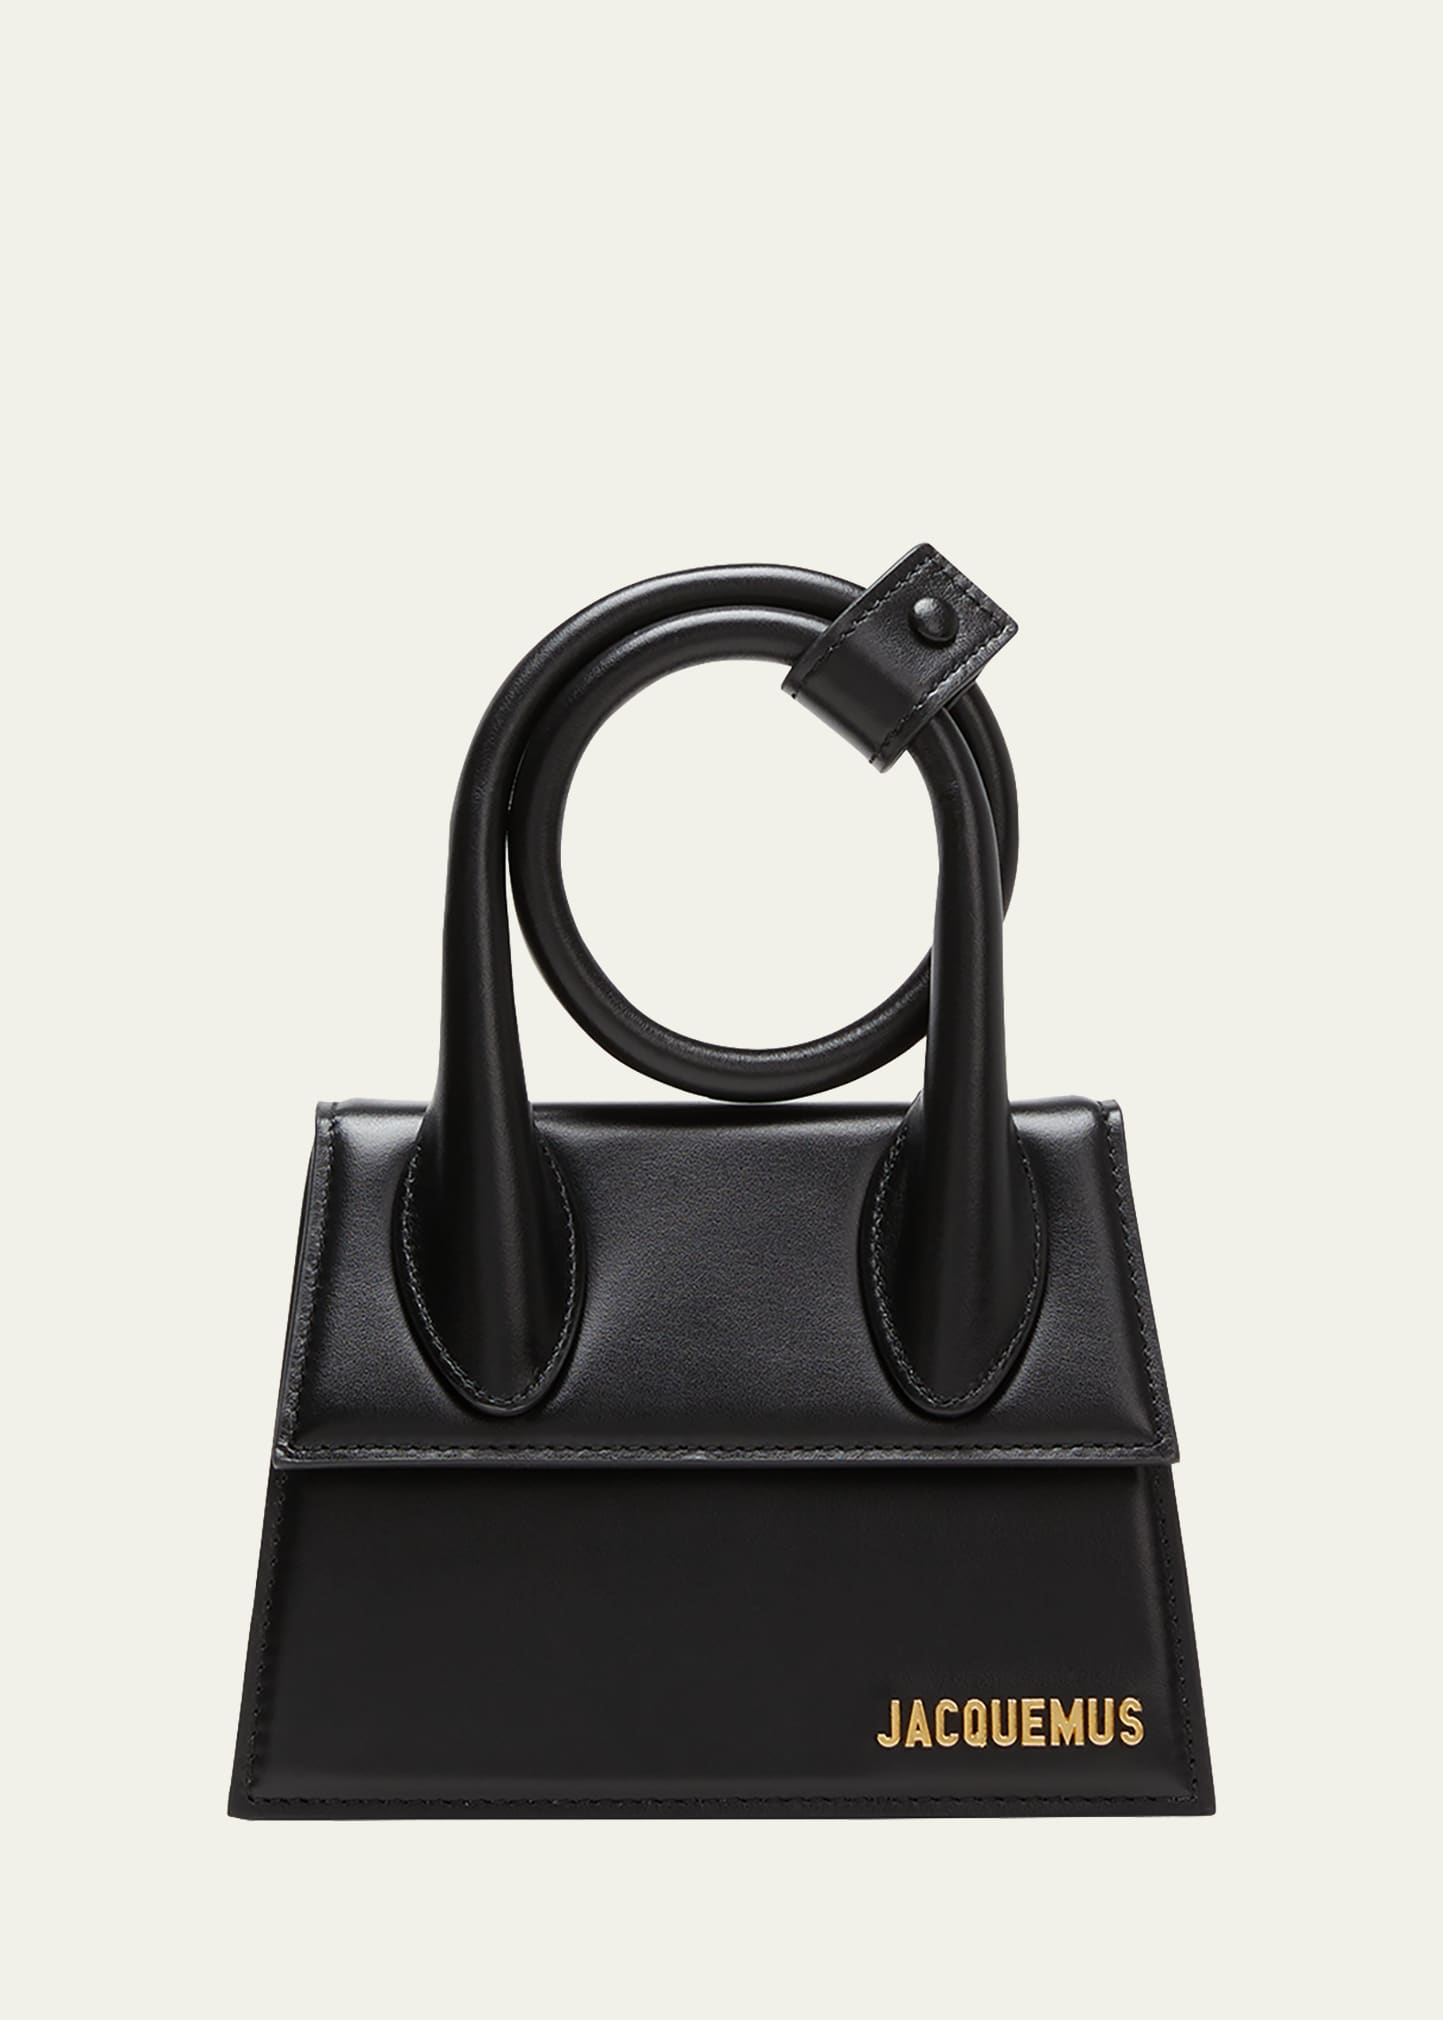 Jacquemus Le Chiquito Noeud Top-Handle Bag, 830 Camel, Women's, Handbags & Purses Top Handle Bags